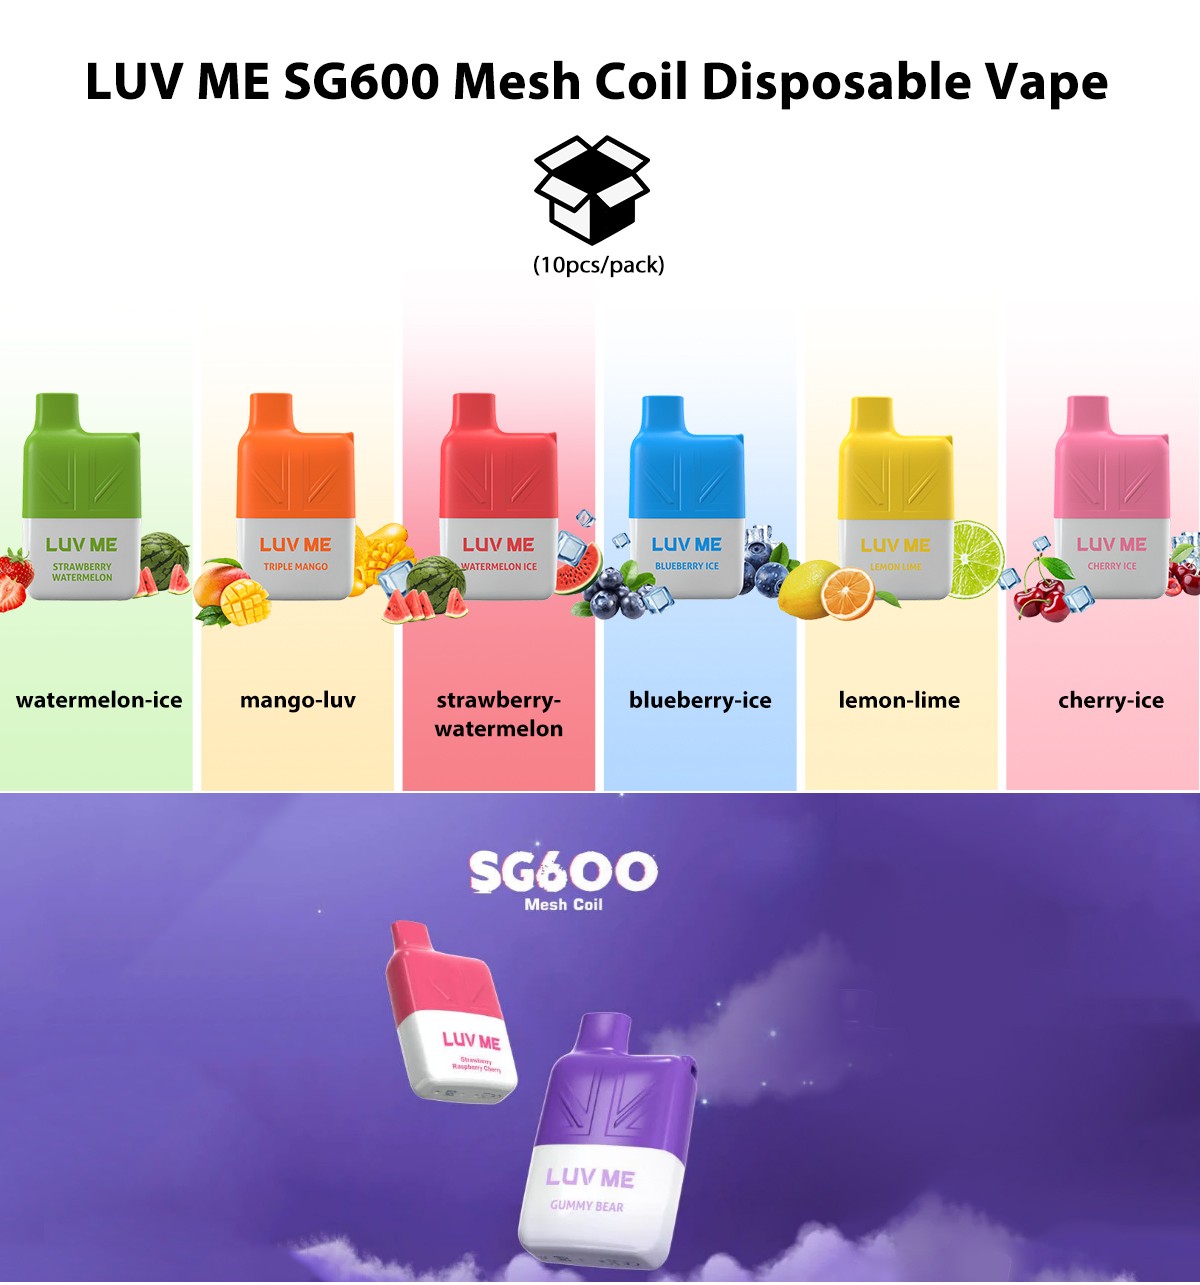 LUV ME SG600 Mesh Coil Disposable Vape